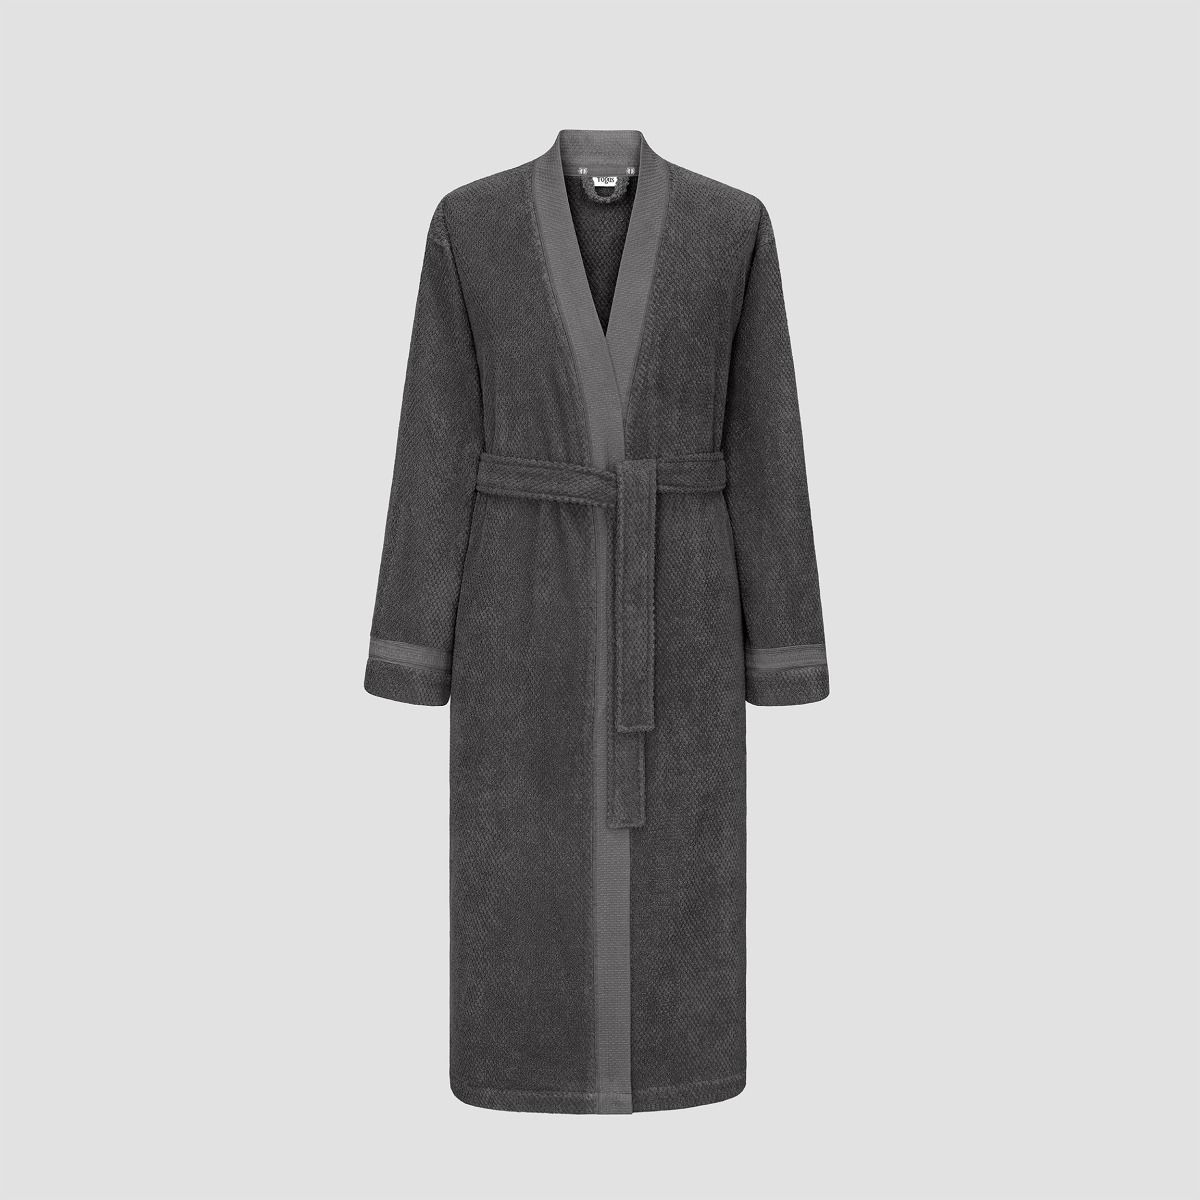 Банный халат Миэль цвет: темно-серый (2XL)